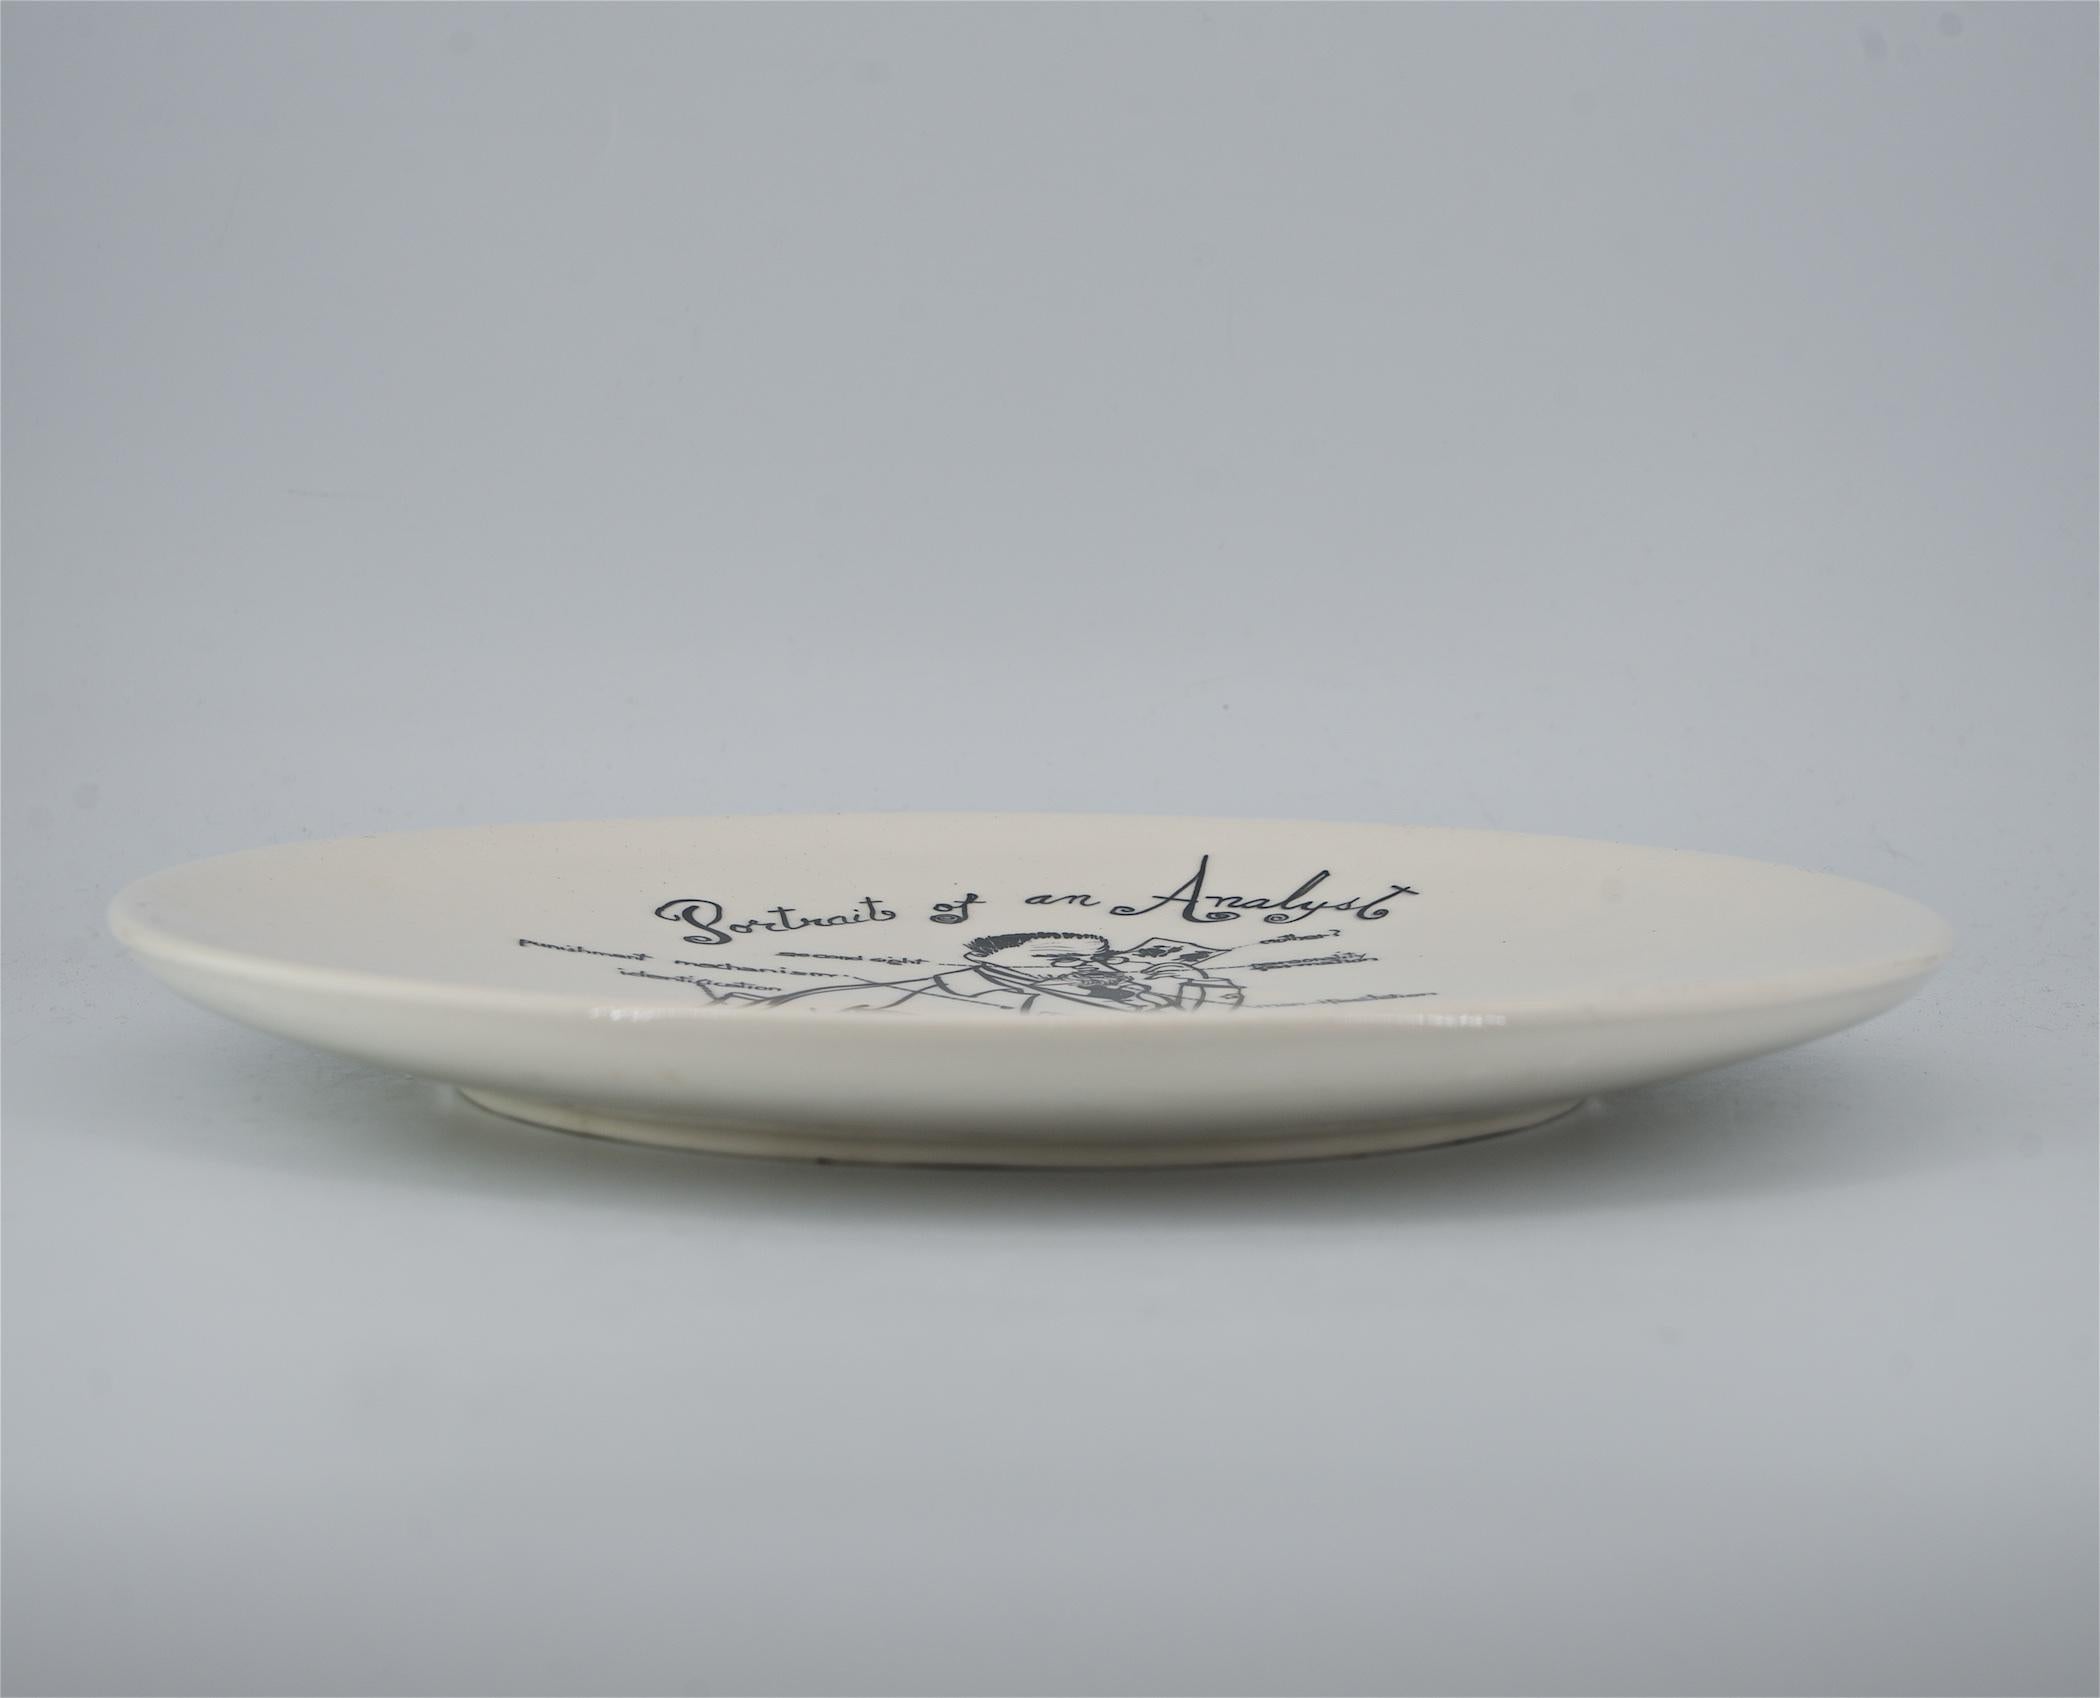 Portrait of Sigmund Freud on hand thrown ceramic plate.
Signed, 